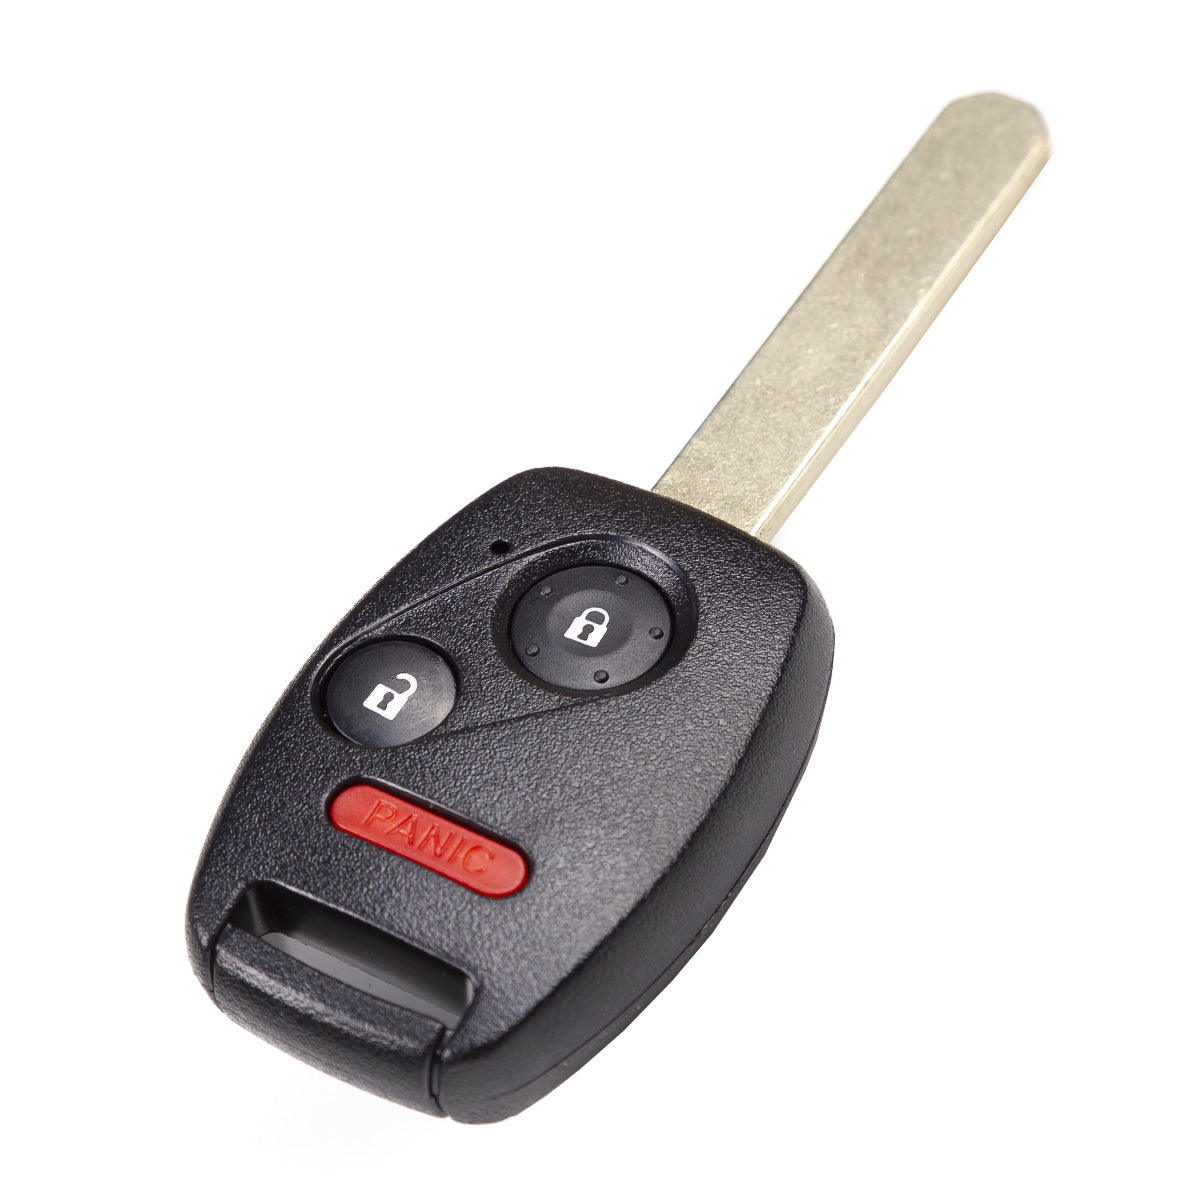 2015 Honda CR-Z Key Fob 3 Buttons FCC # MLBHLIK-1T